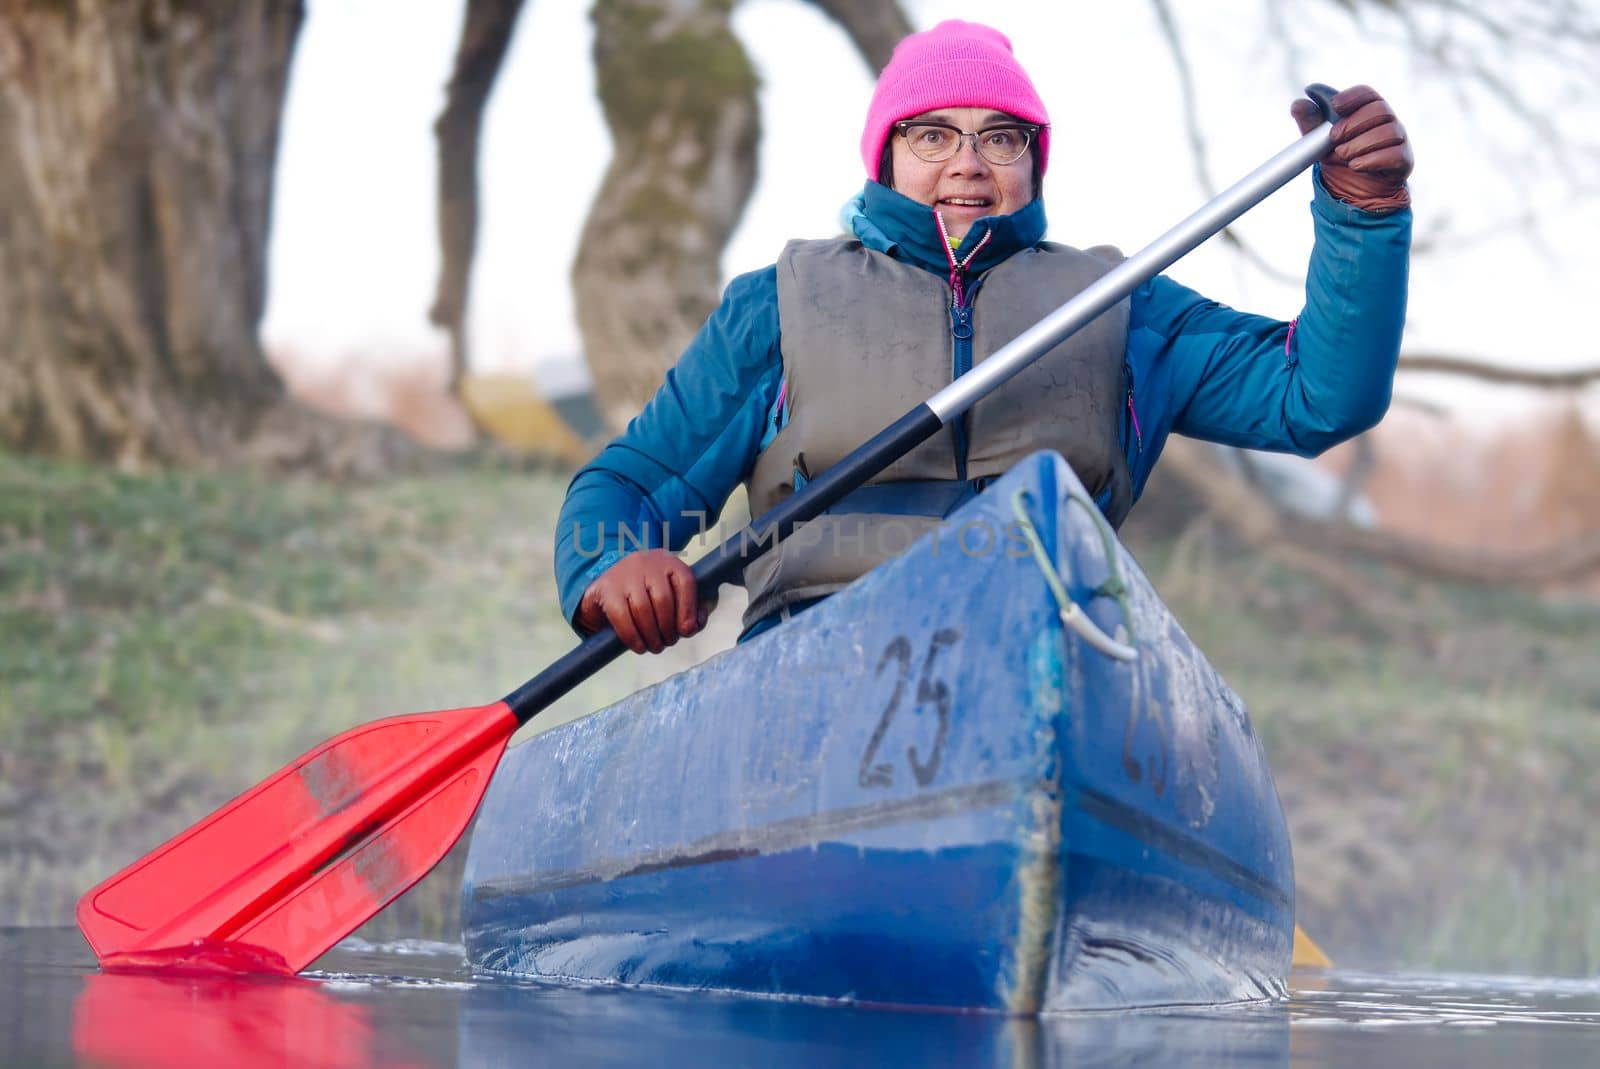 Seniors kayaking, activity. Happy senior. Active elderly concept around the world by PhotoTime